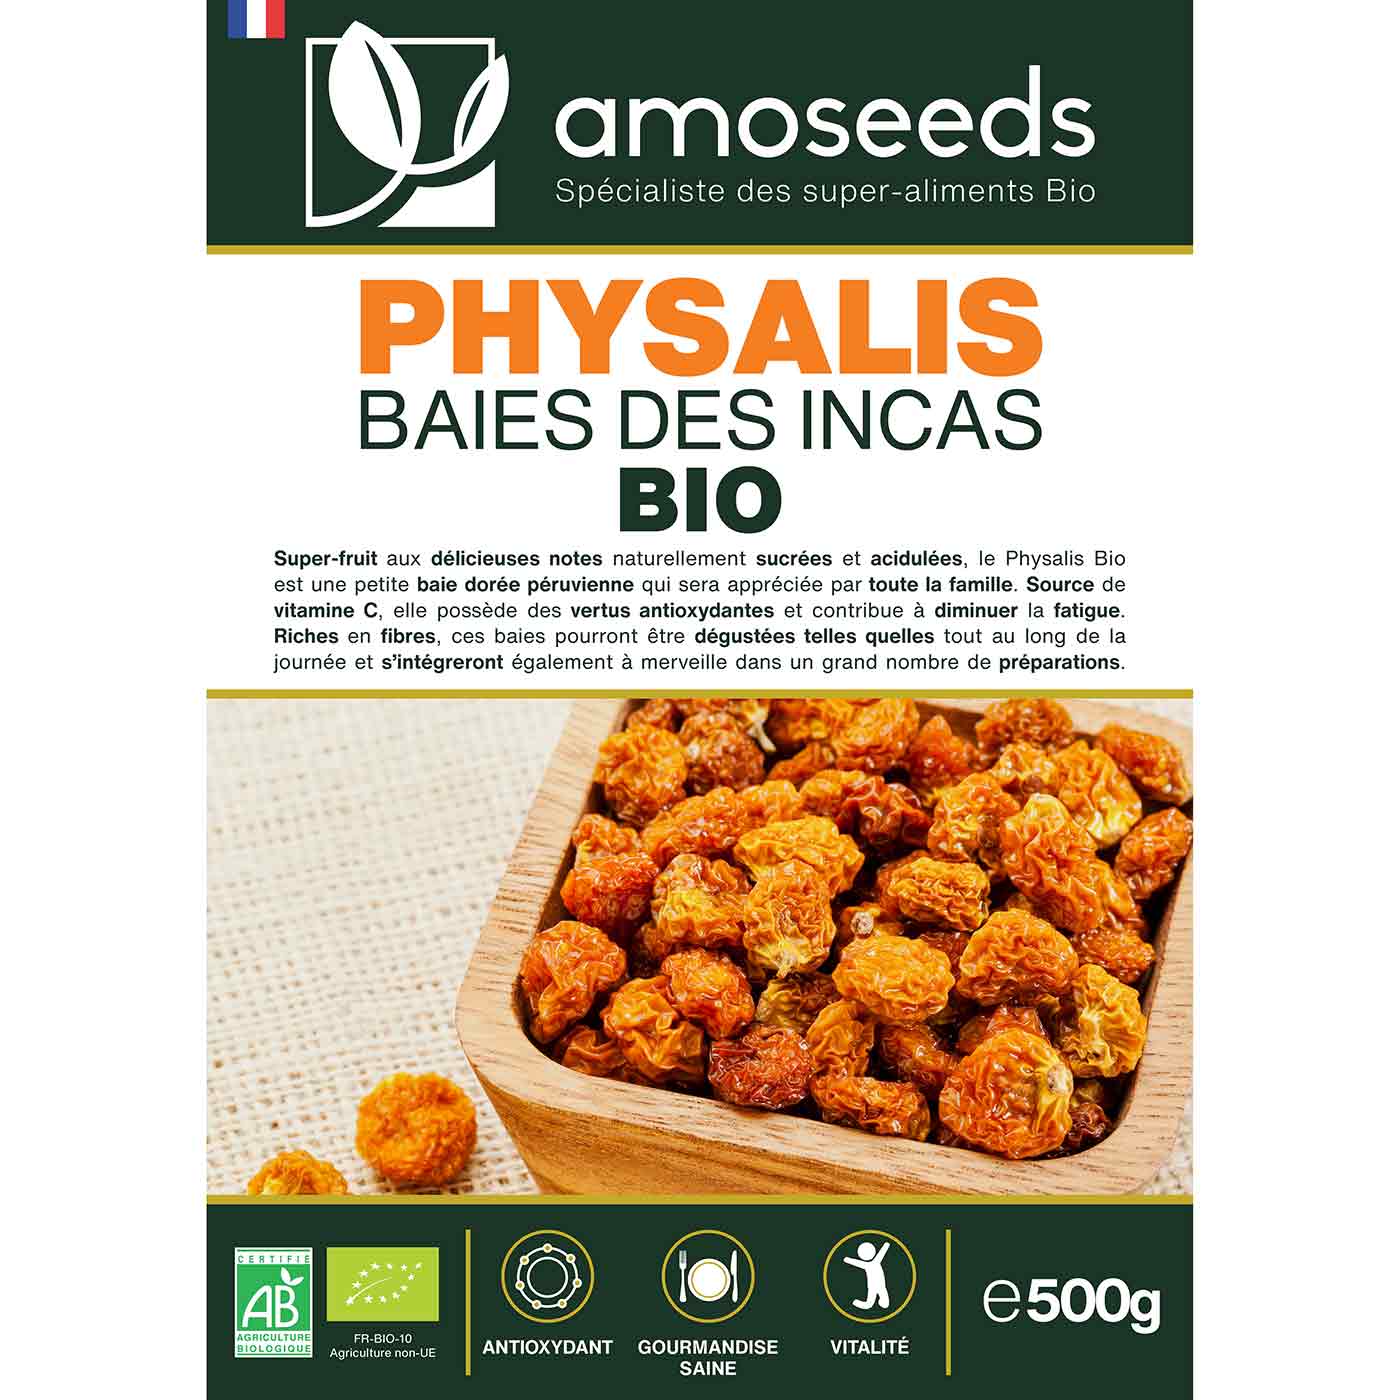 Physalis baies incas bio 500G amoseeds specialiste des super aliments bio